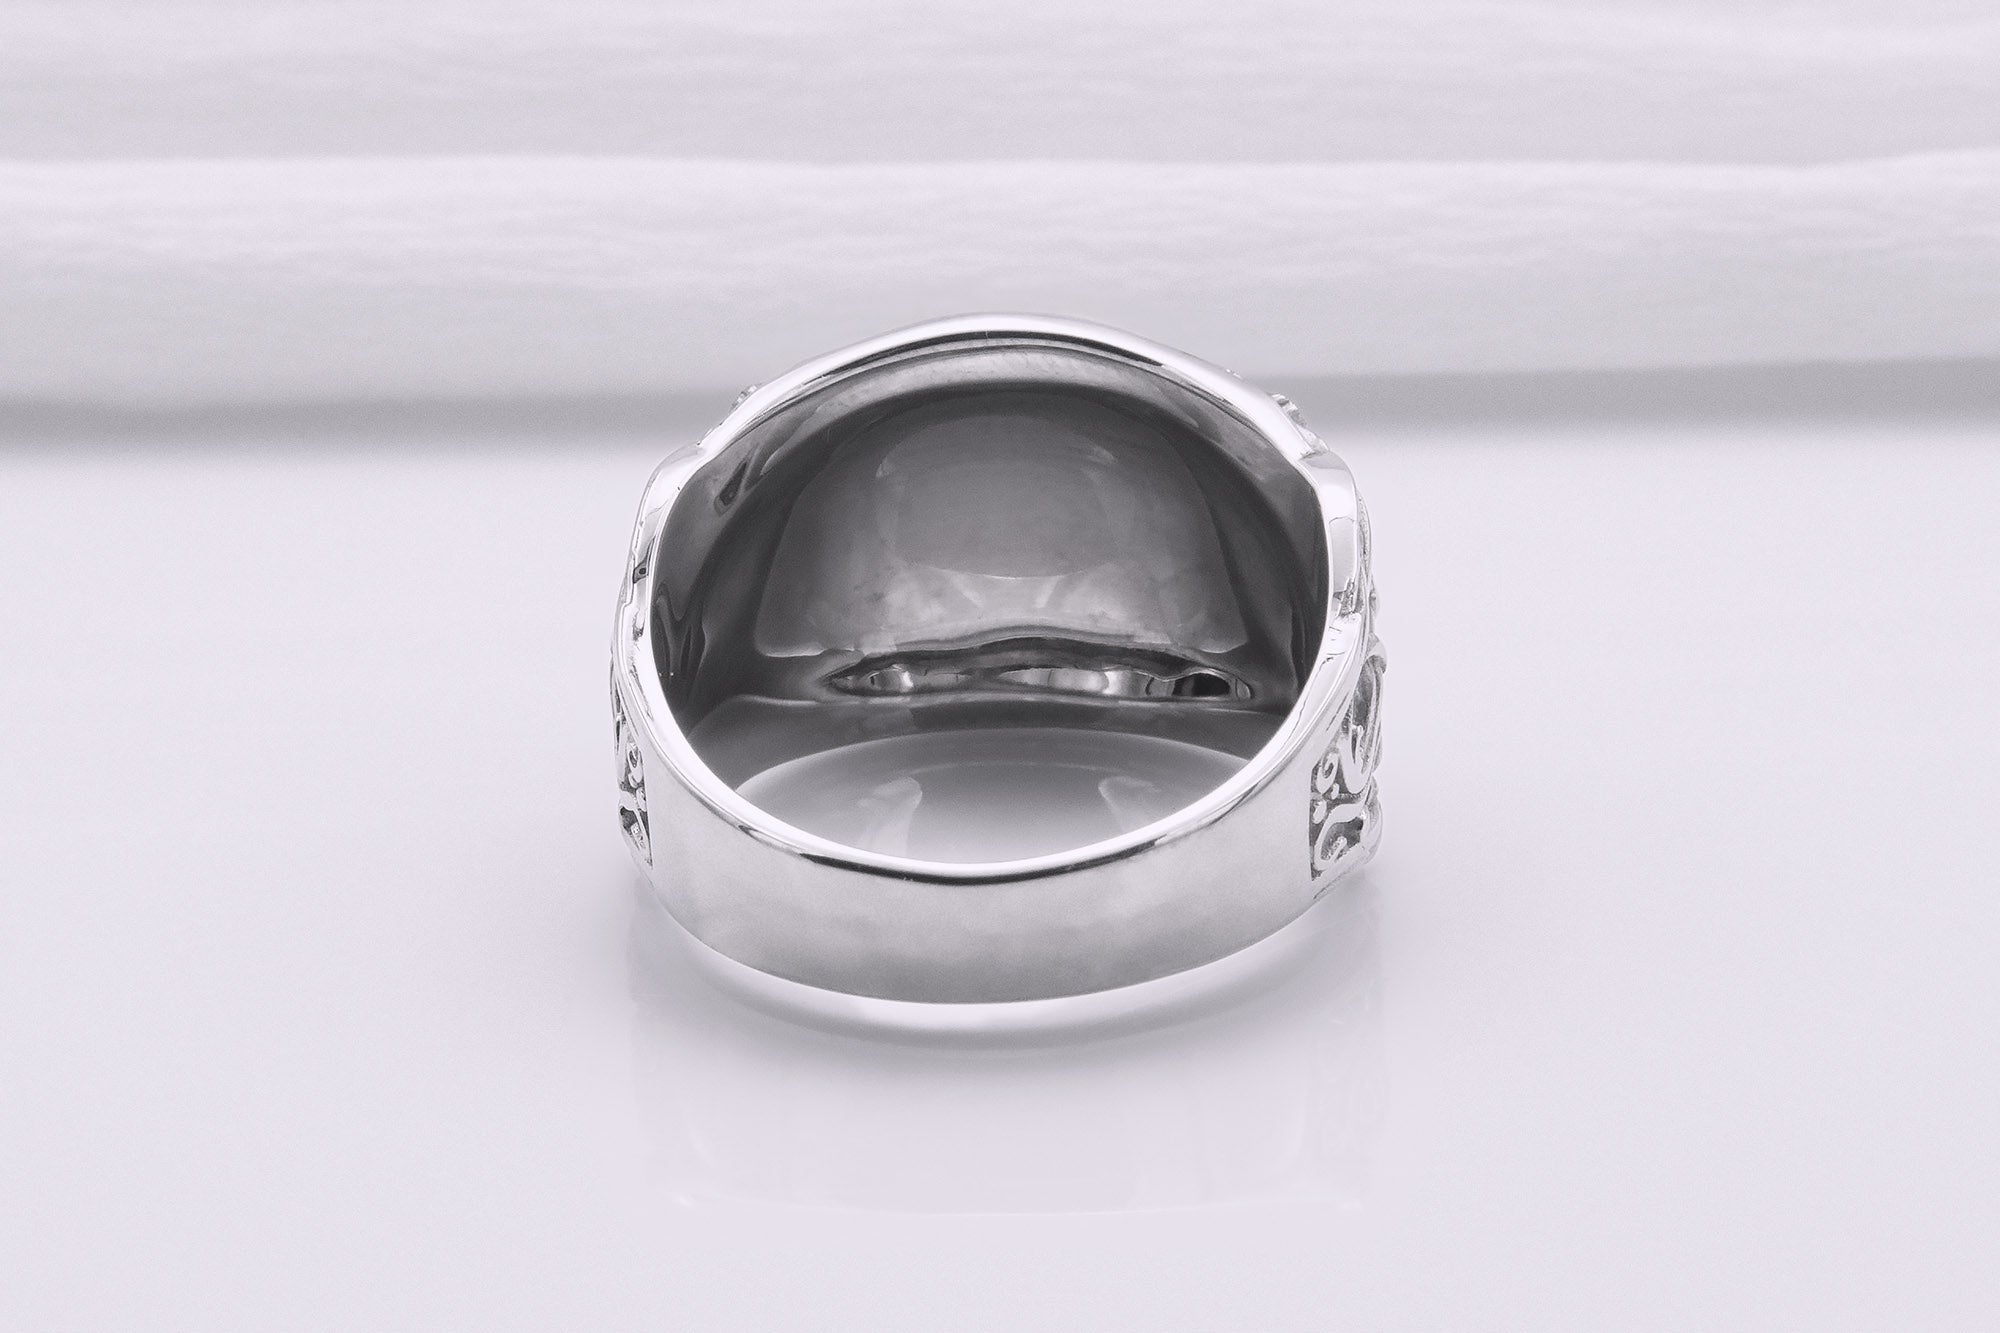 950 Platinum Ring with Black Sun Symbol and Mammen Ornament, Handmade Norse Jewelry - vikingworkshop